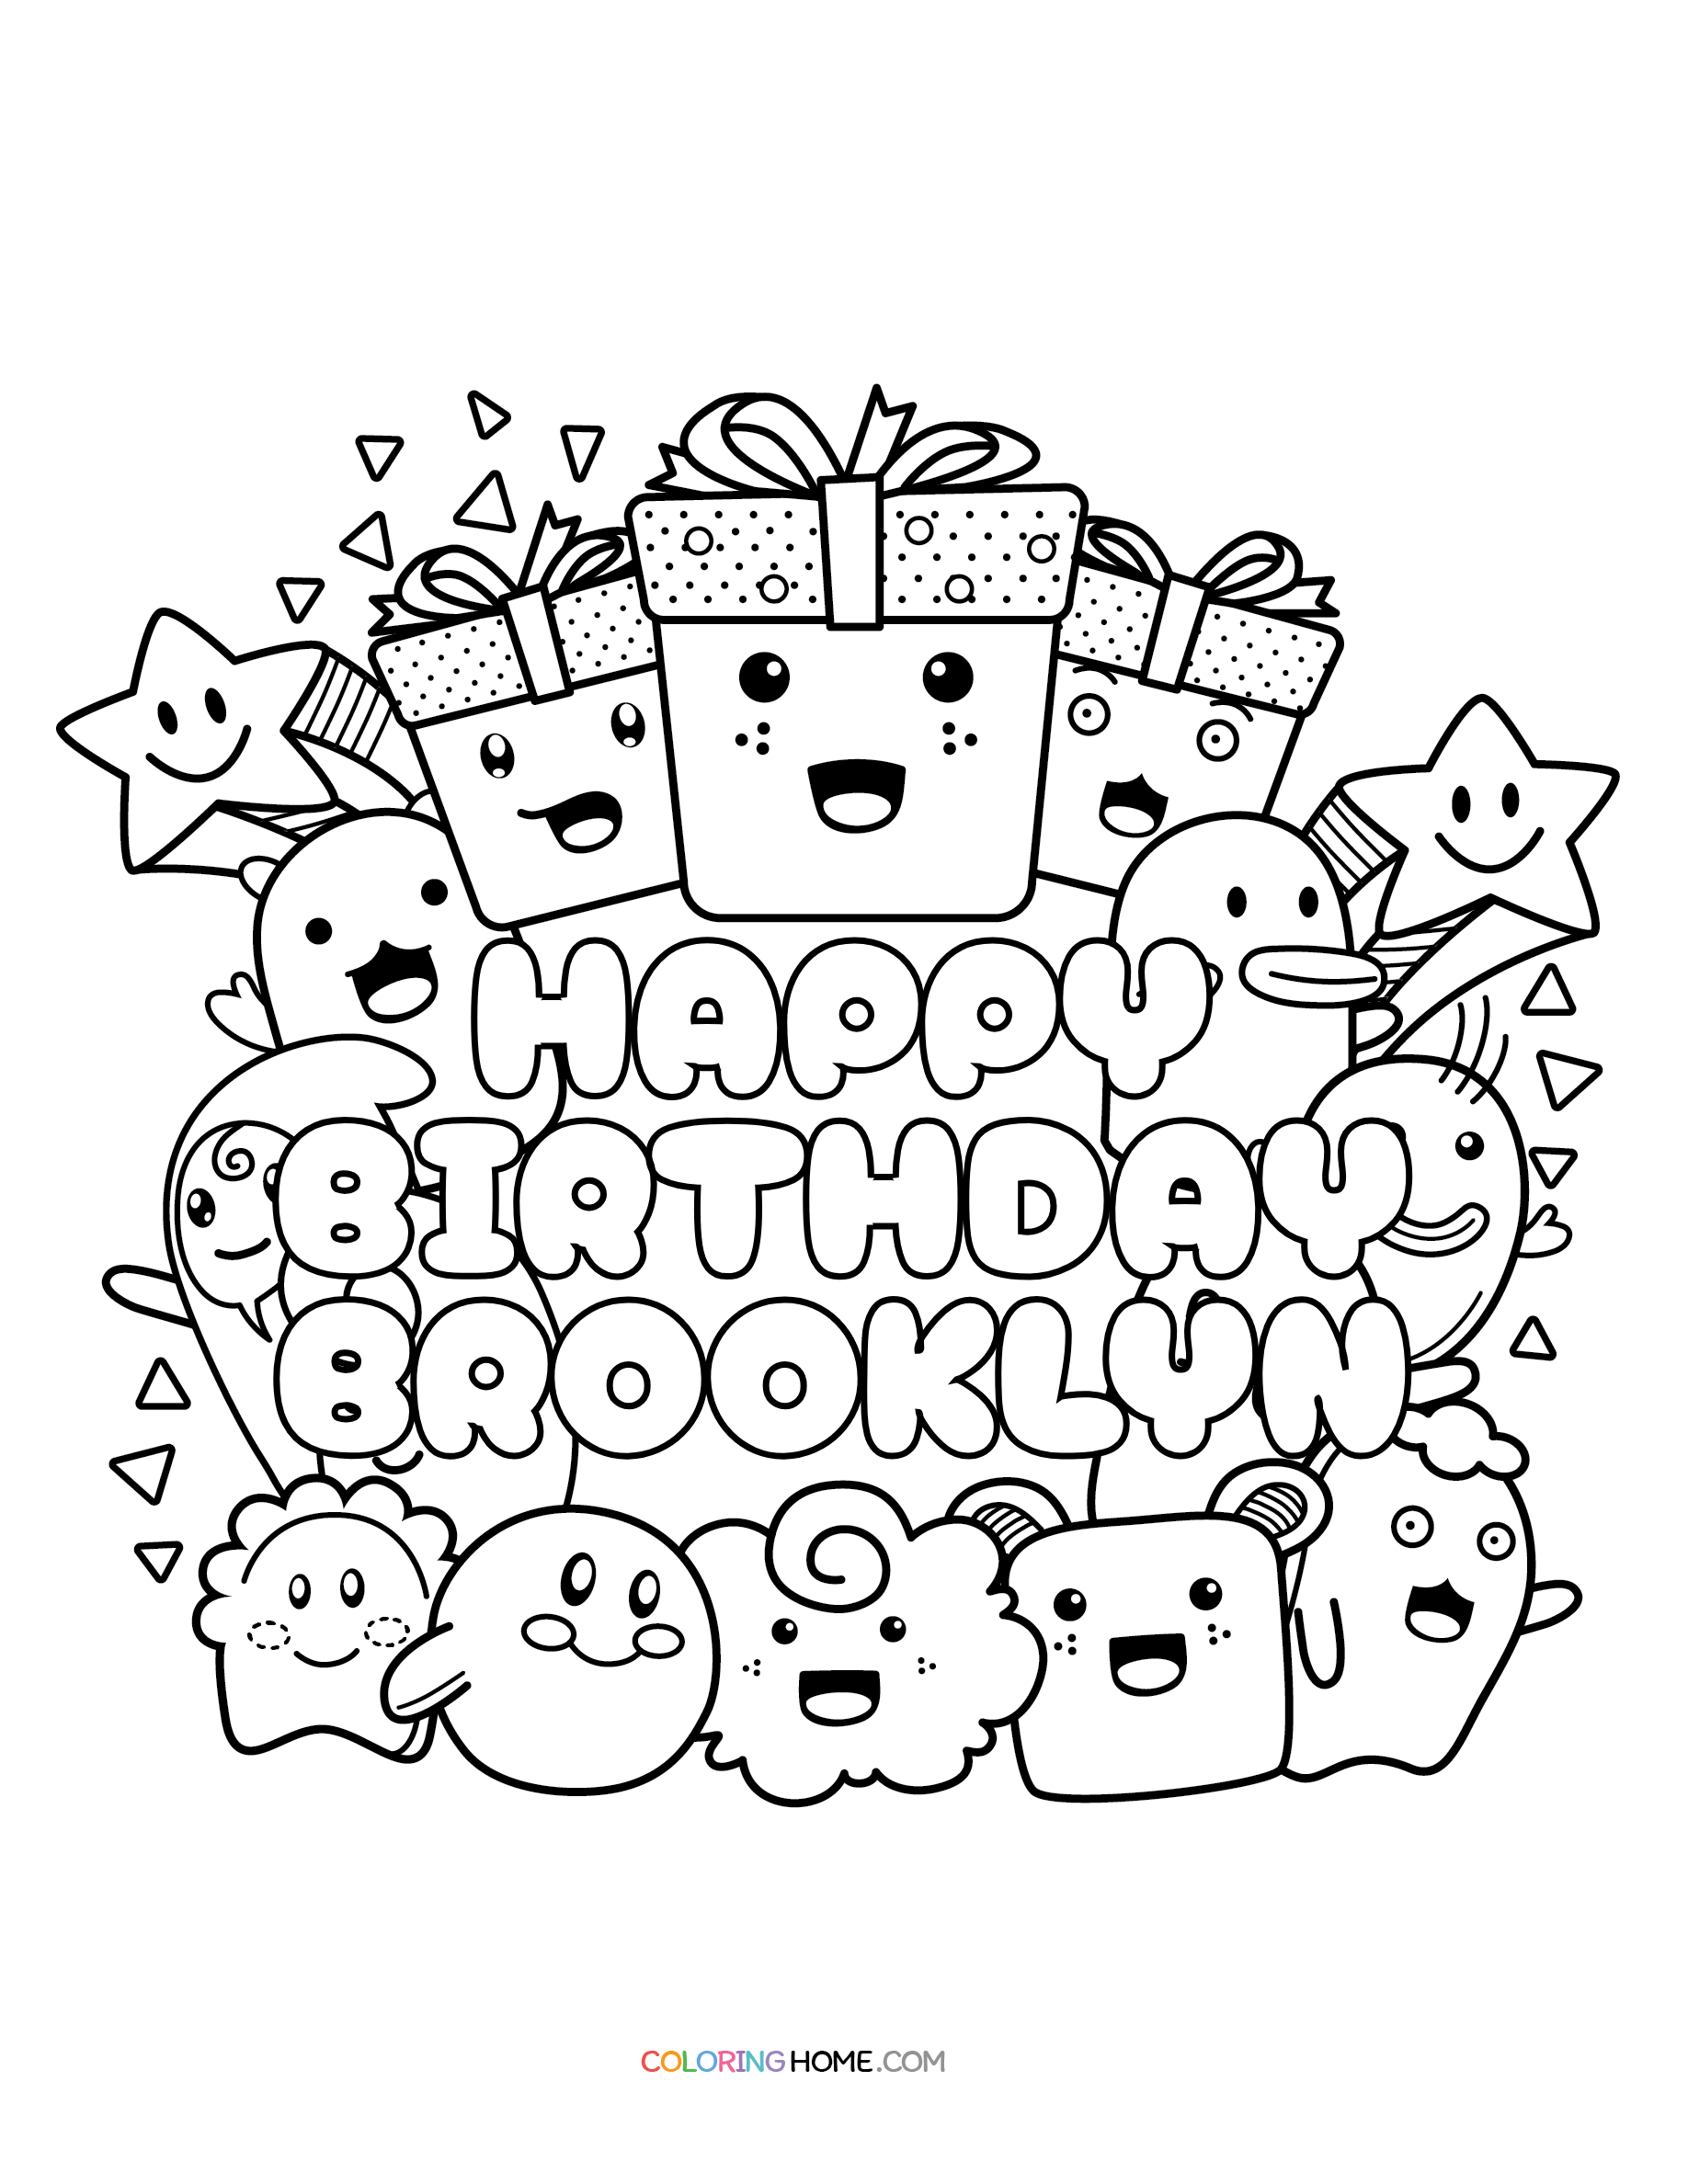 Happy Birthday Brooklyn coloring page